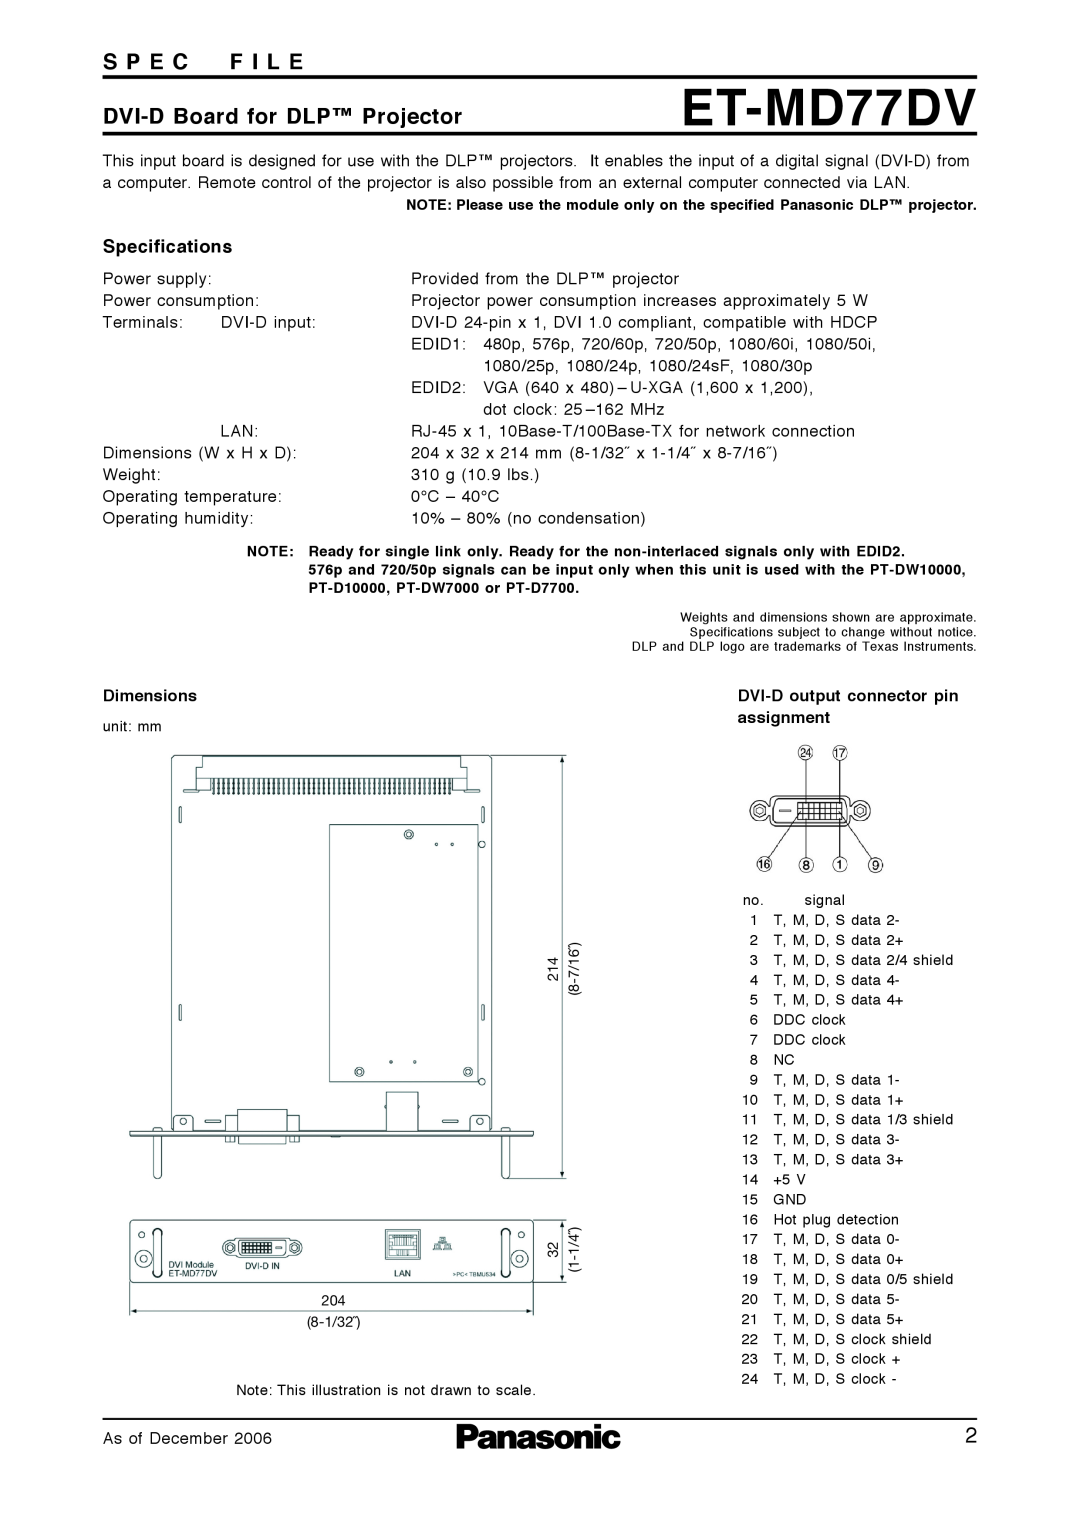 Panasonic ET-MD77NT ET-MD77DV, DVI-D Board for DLP Projector, Dimensions, DVI-D output connector pin assignment 